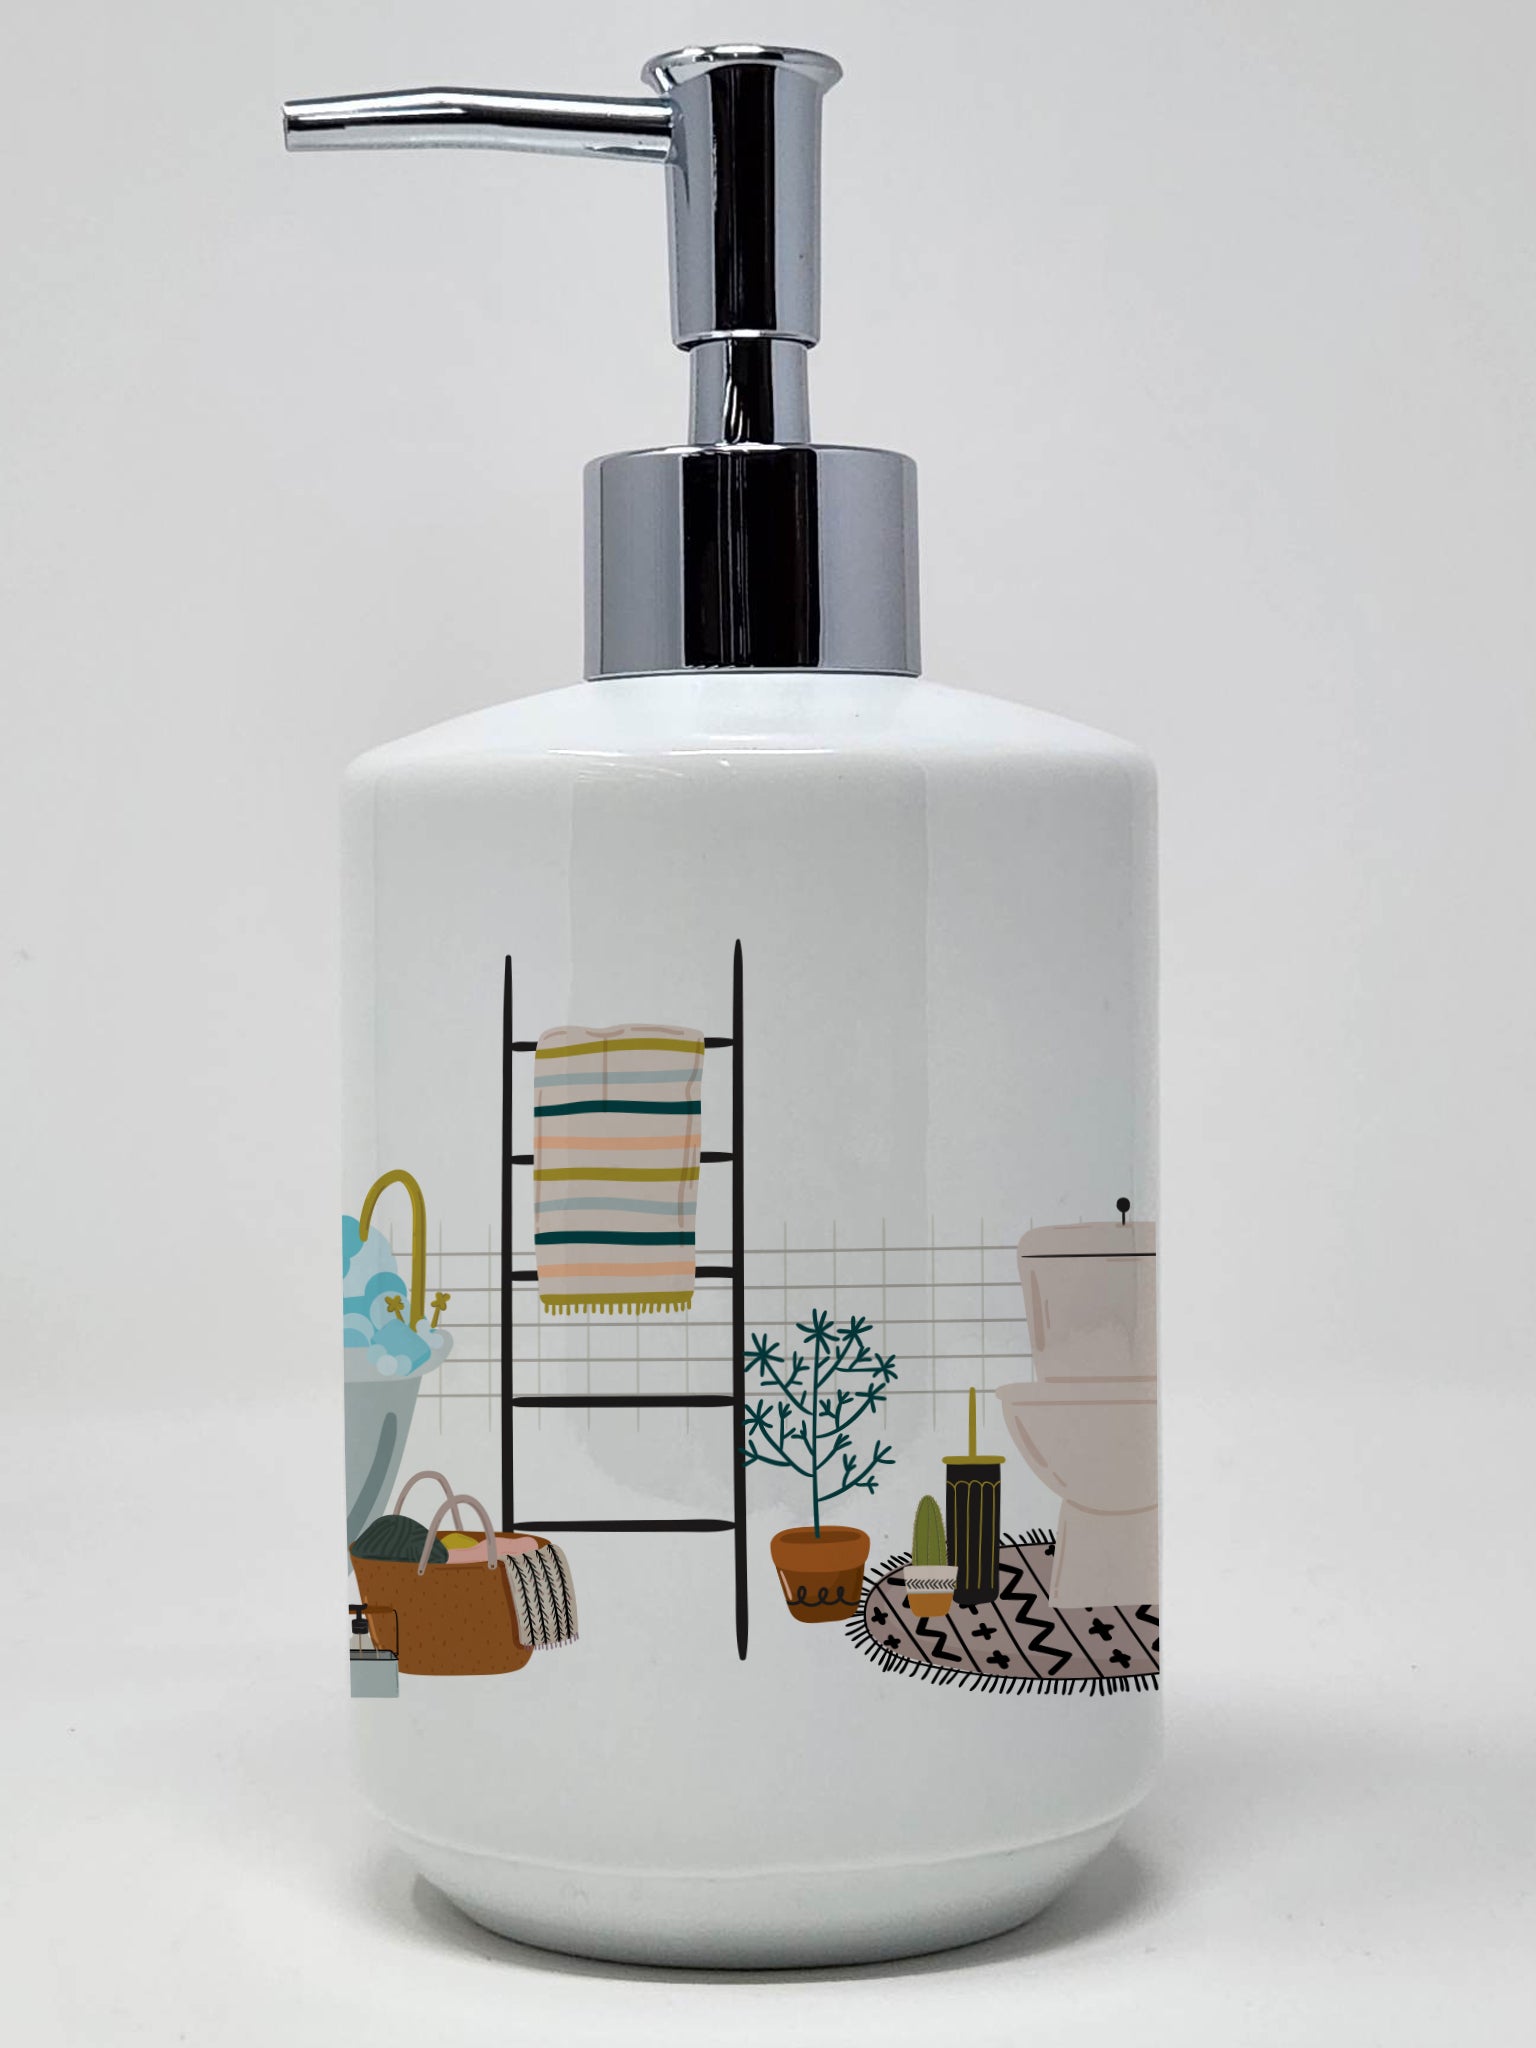 Buy this Tricolor Sheltie Ceramic Soap Dispenser